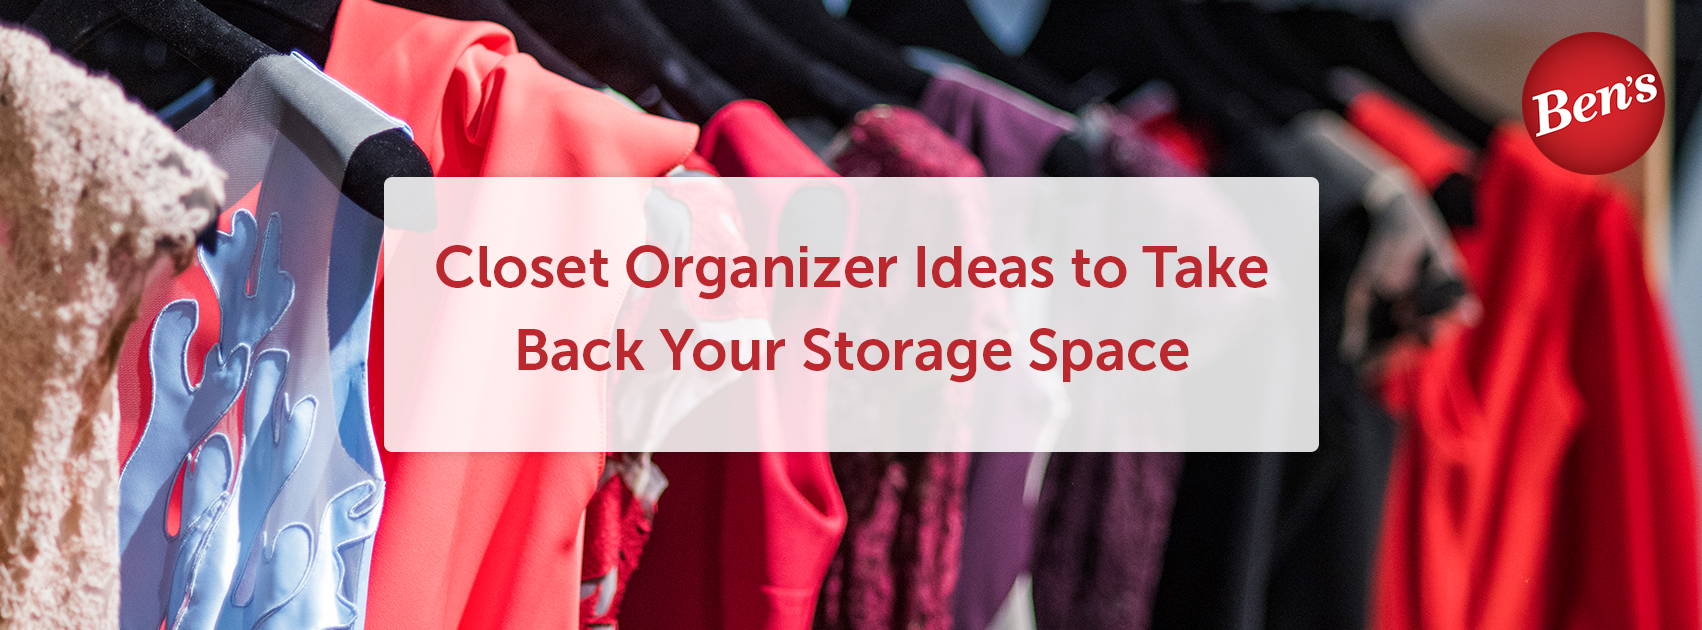 Closet Organizer Ideas to Take Back Your Storage Space